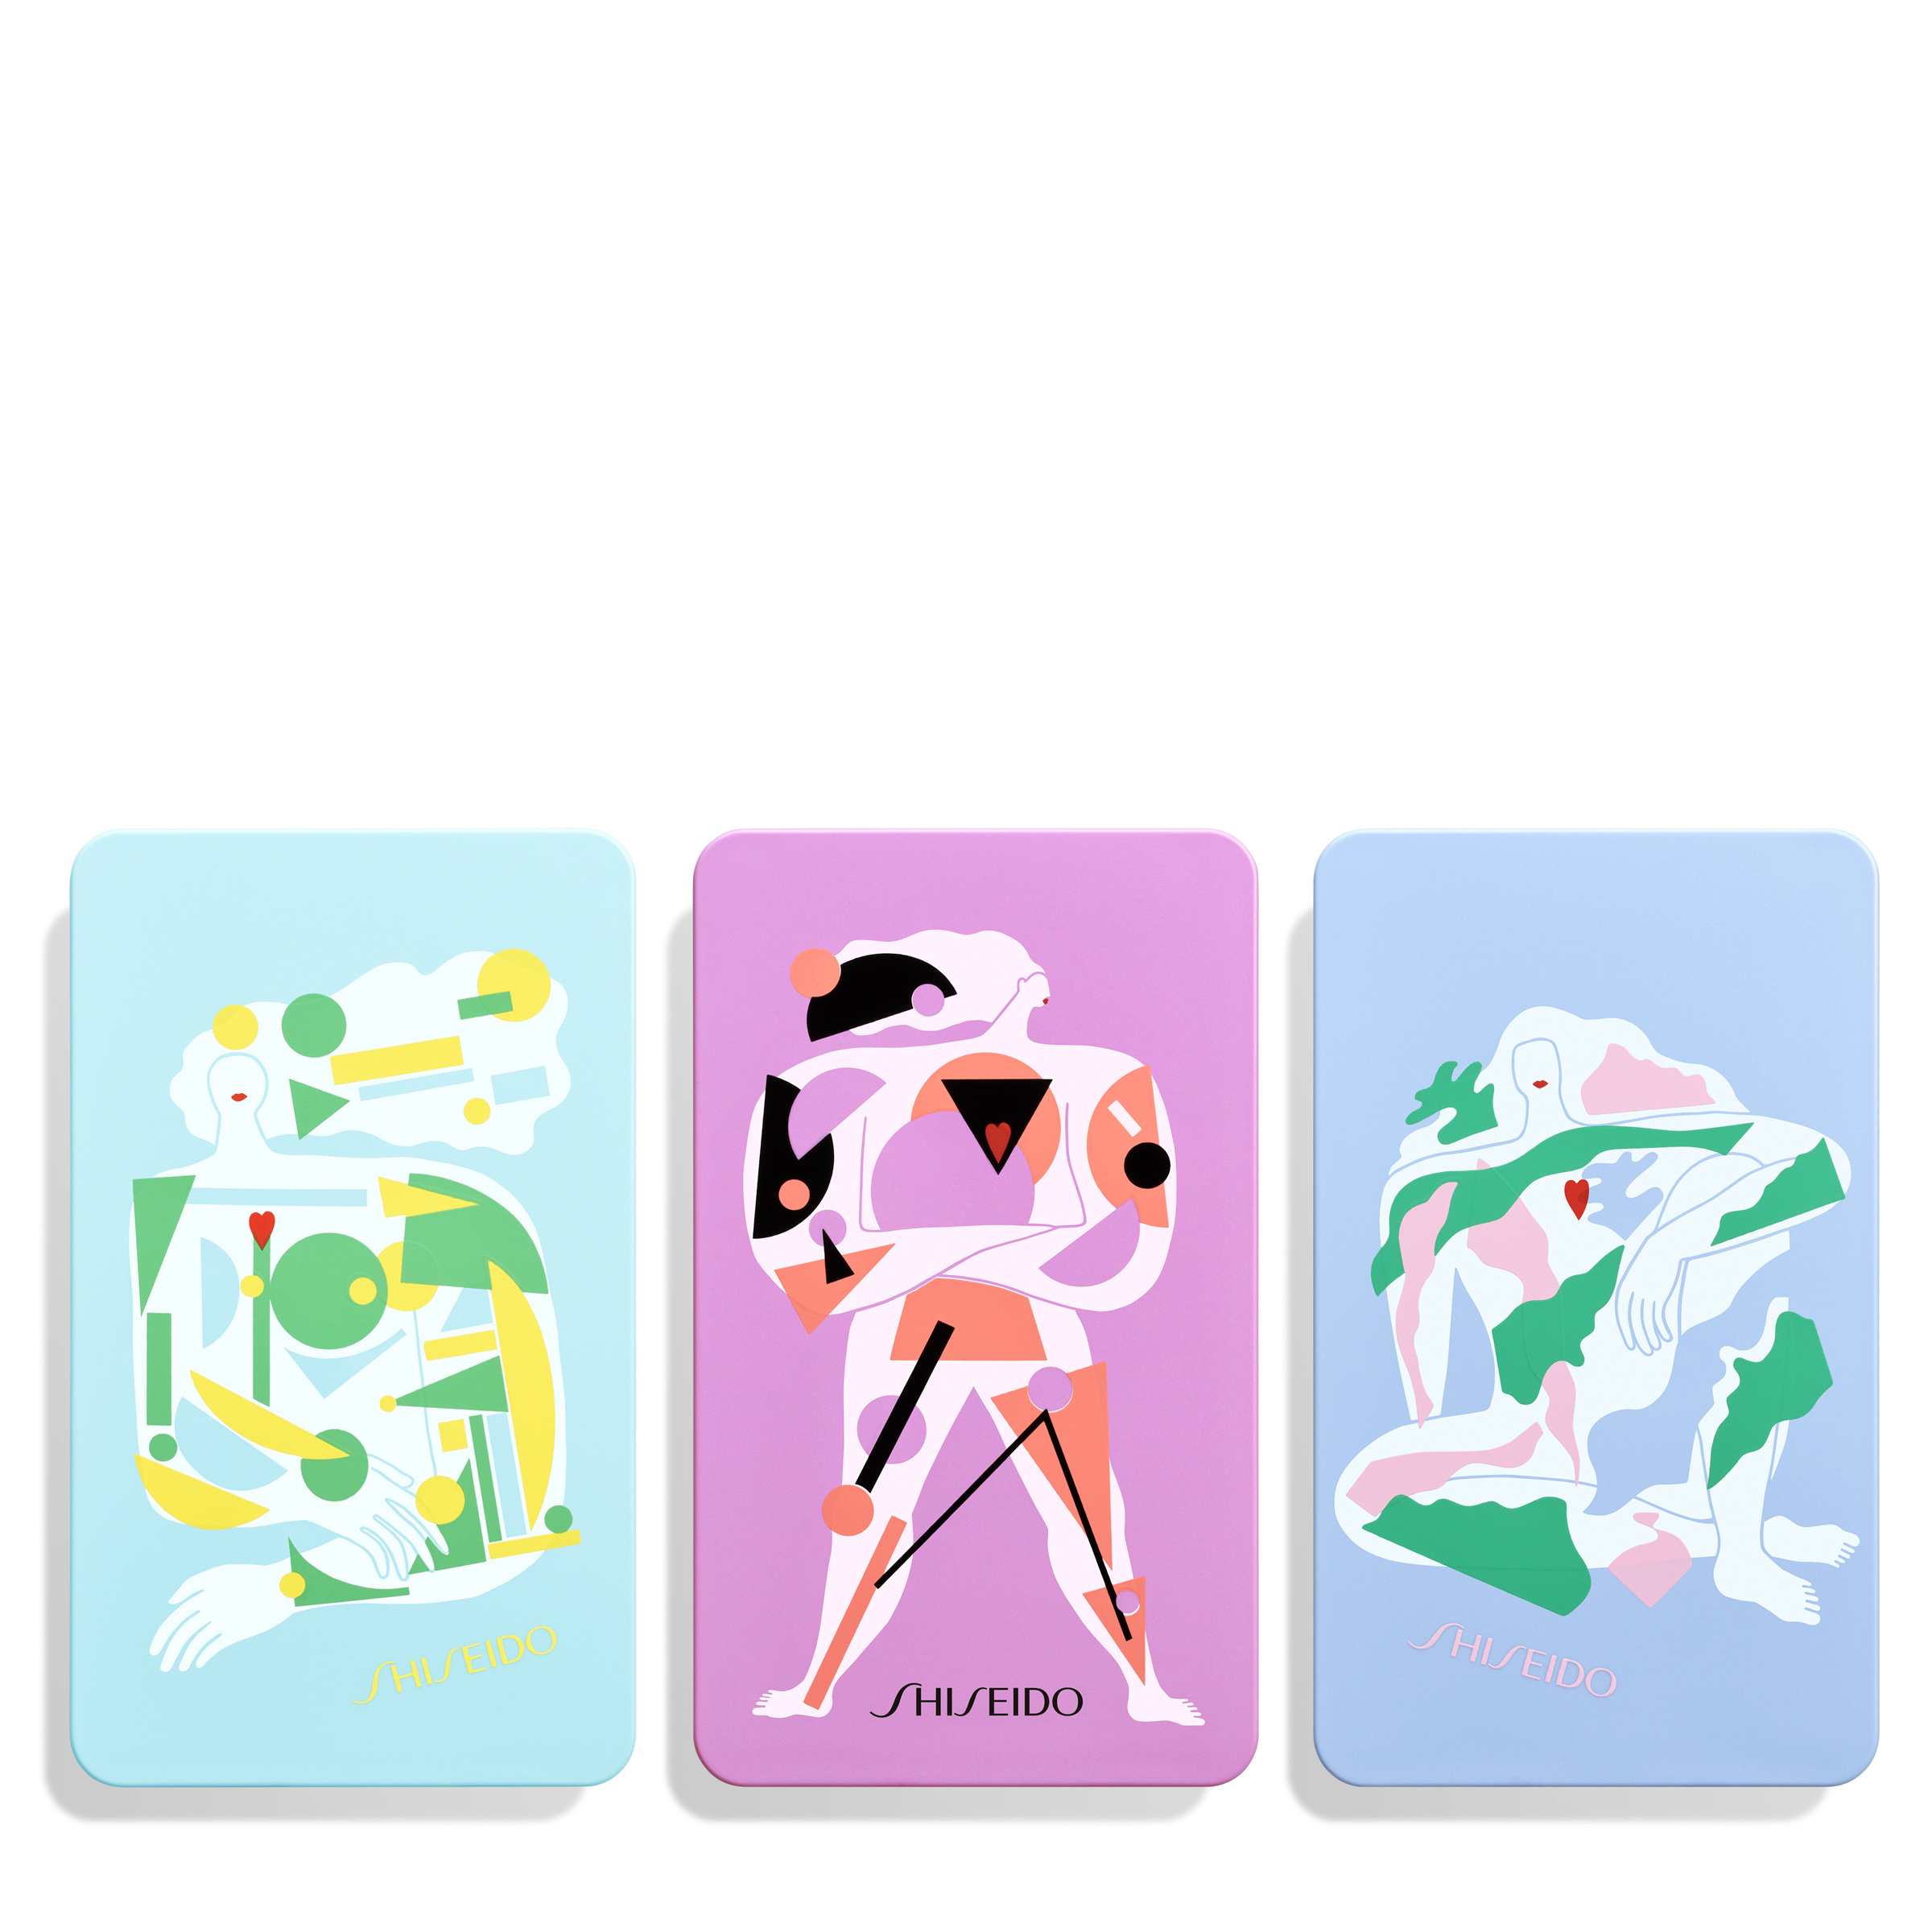 SHISEIDOのミニサイズコスメ「ピコ」からリップパレット発売 海をイメージした3色を展開